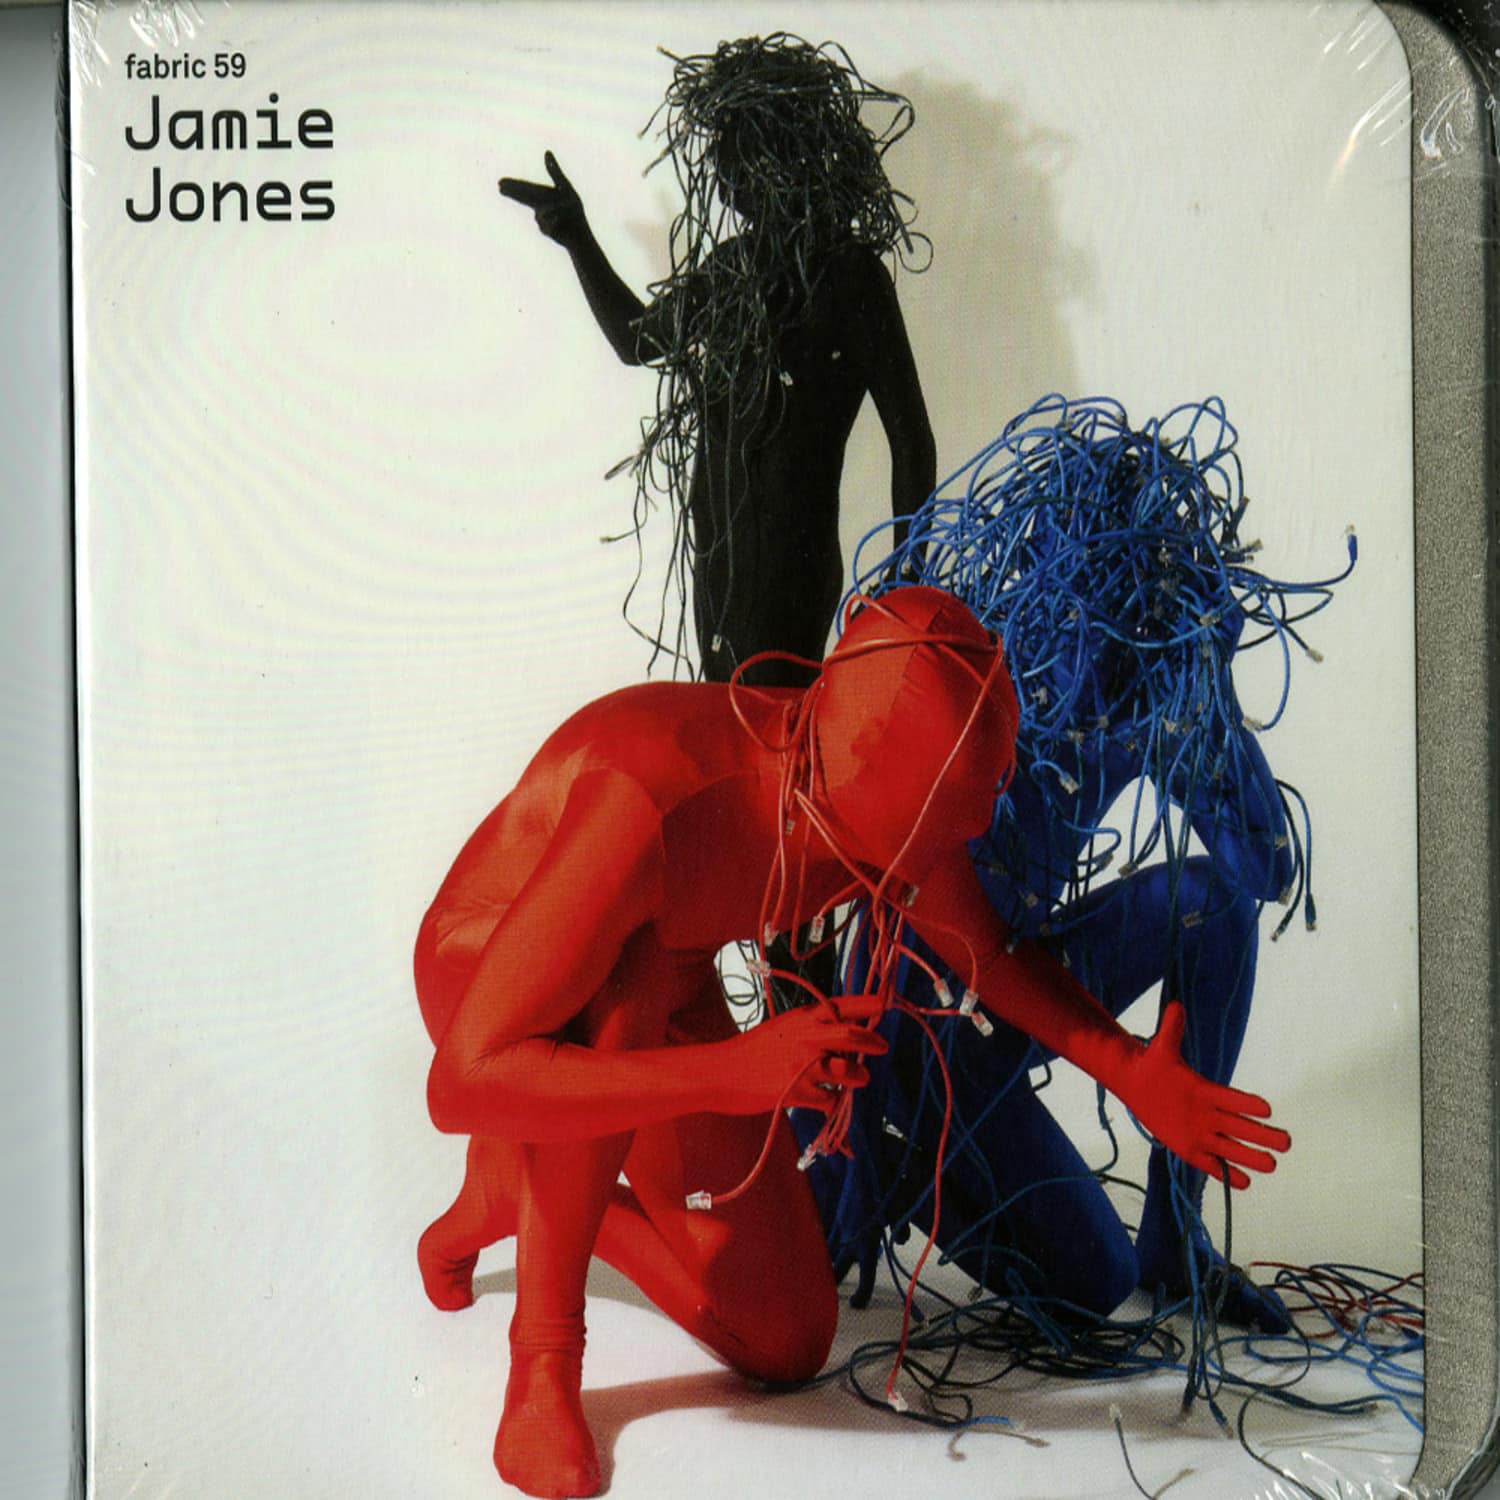 Jamie Jones - FABRIC 59 